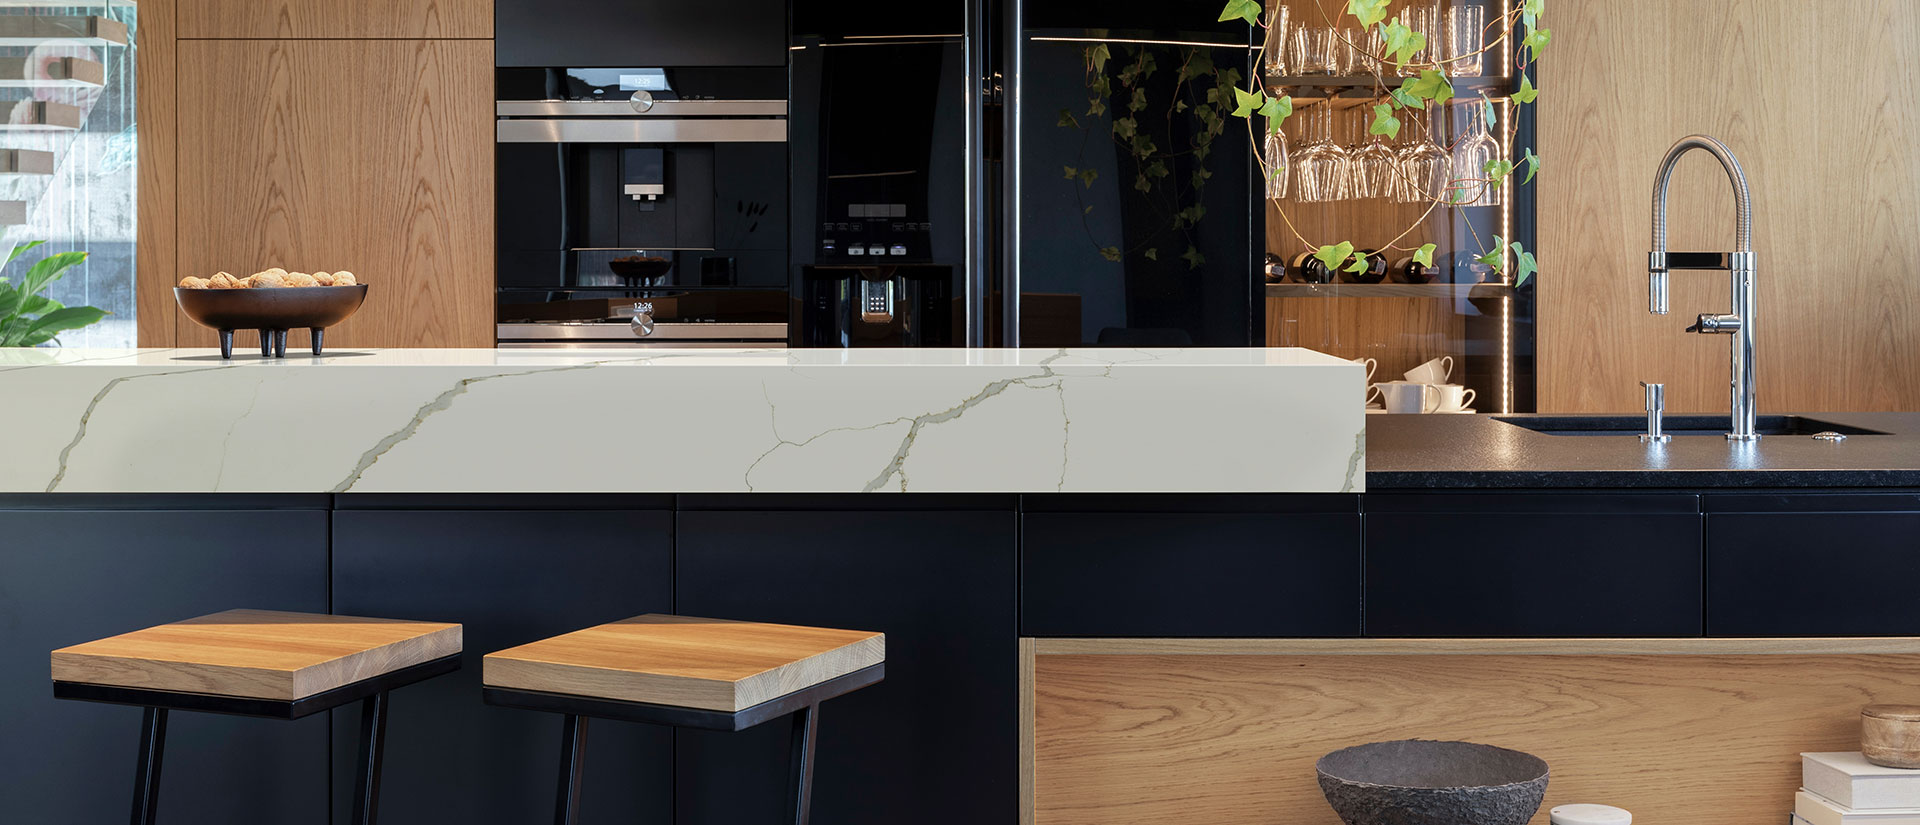 New Calacatta Laza Gold Quartz countertop in a modern and chic kitchen